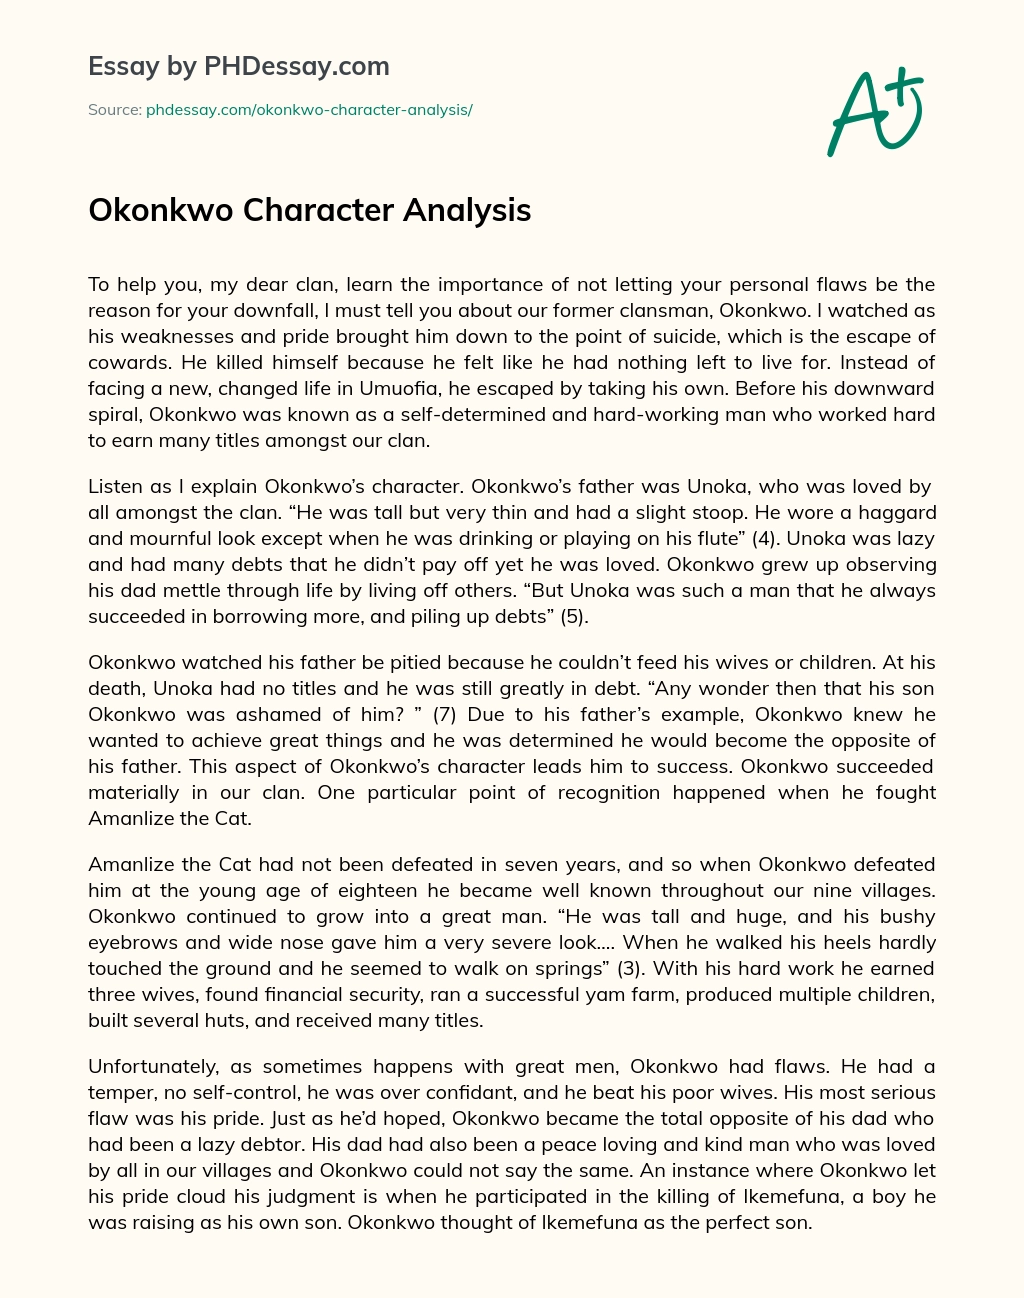 Okonkwo Character Analysis essay